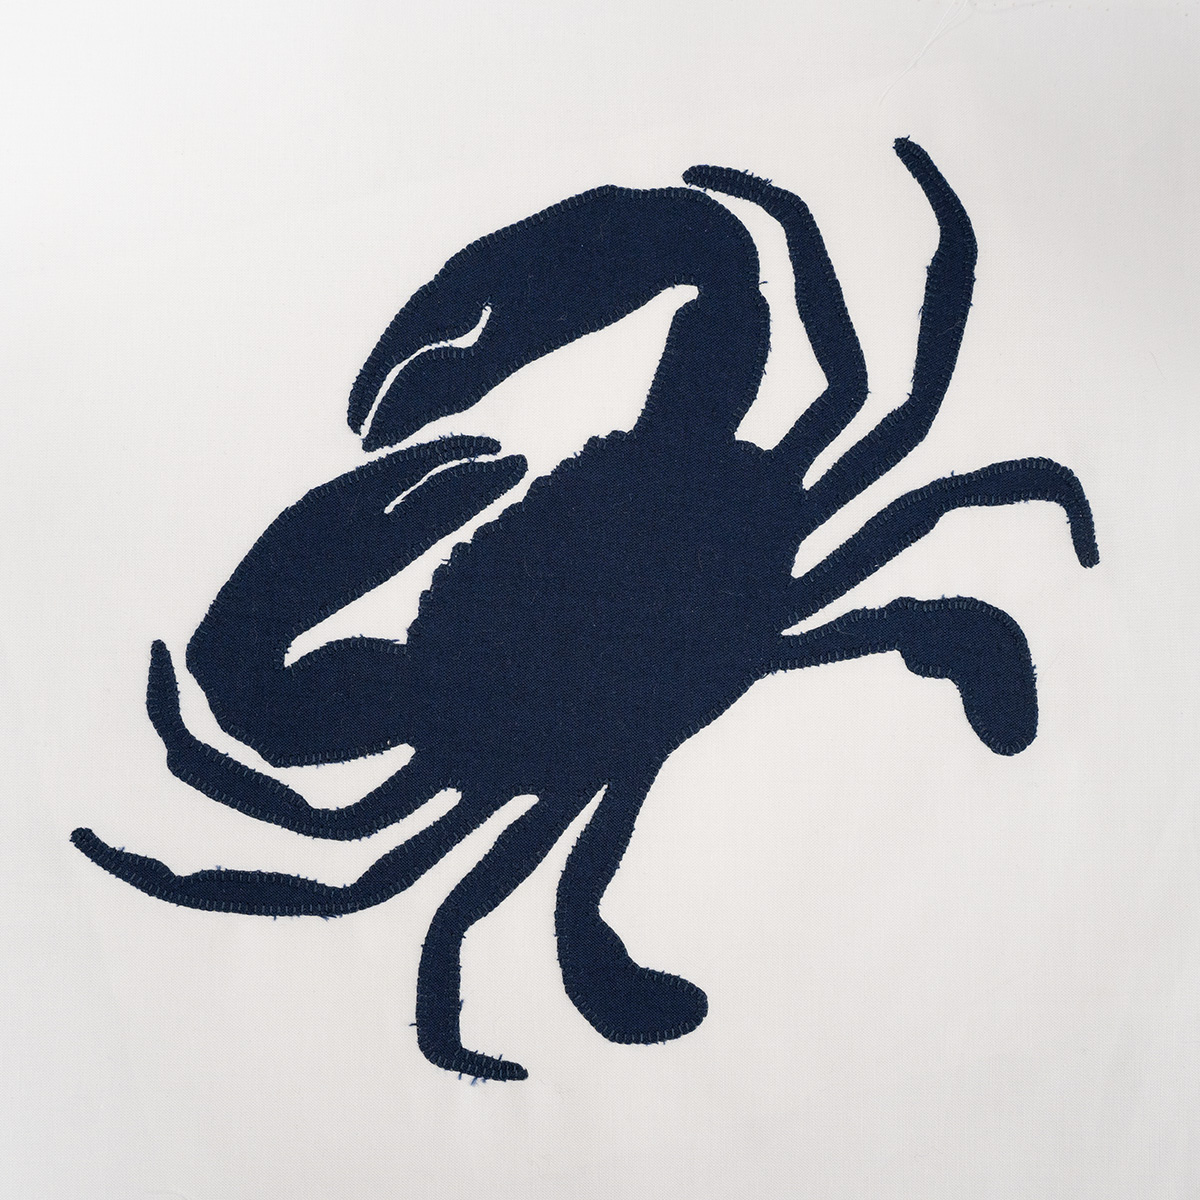 Crab silhouette